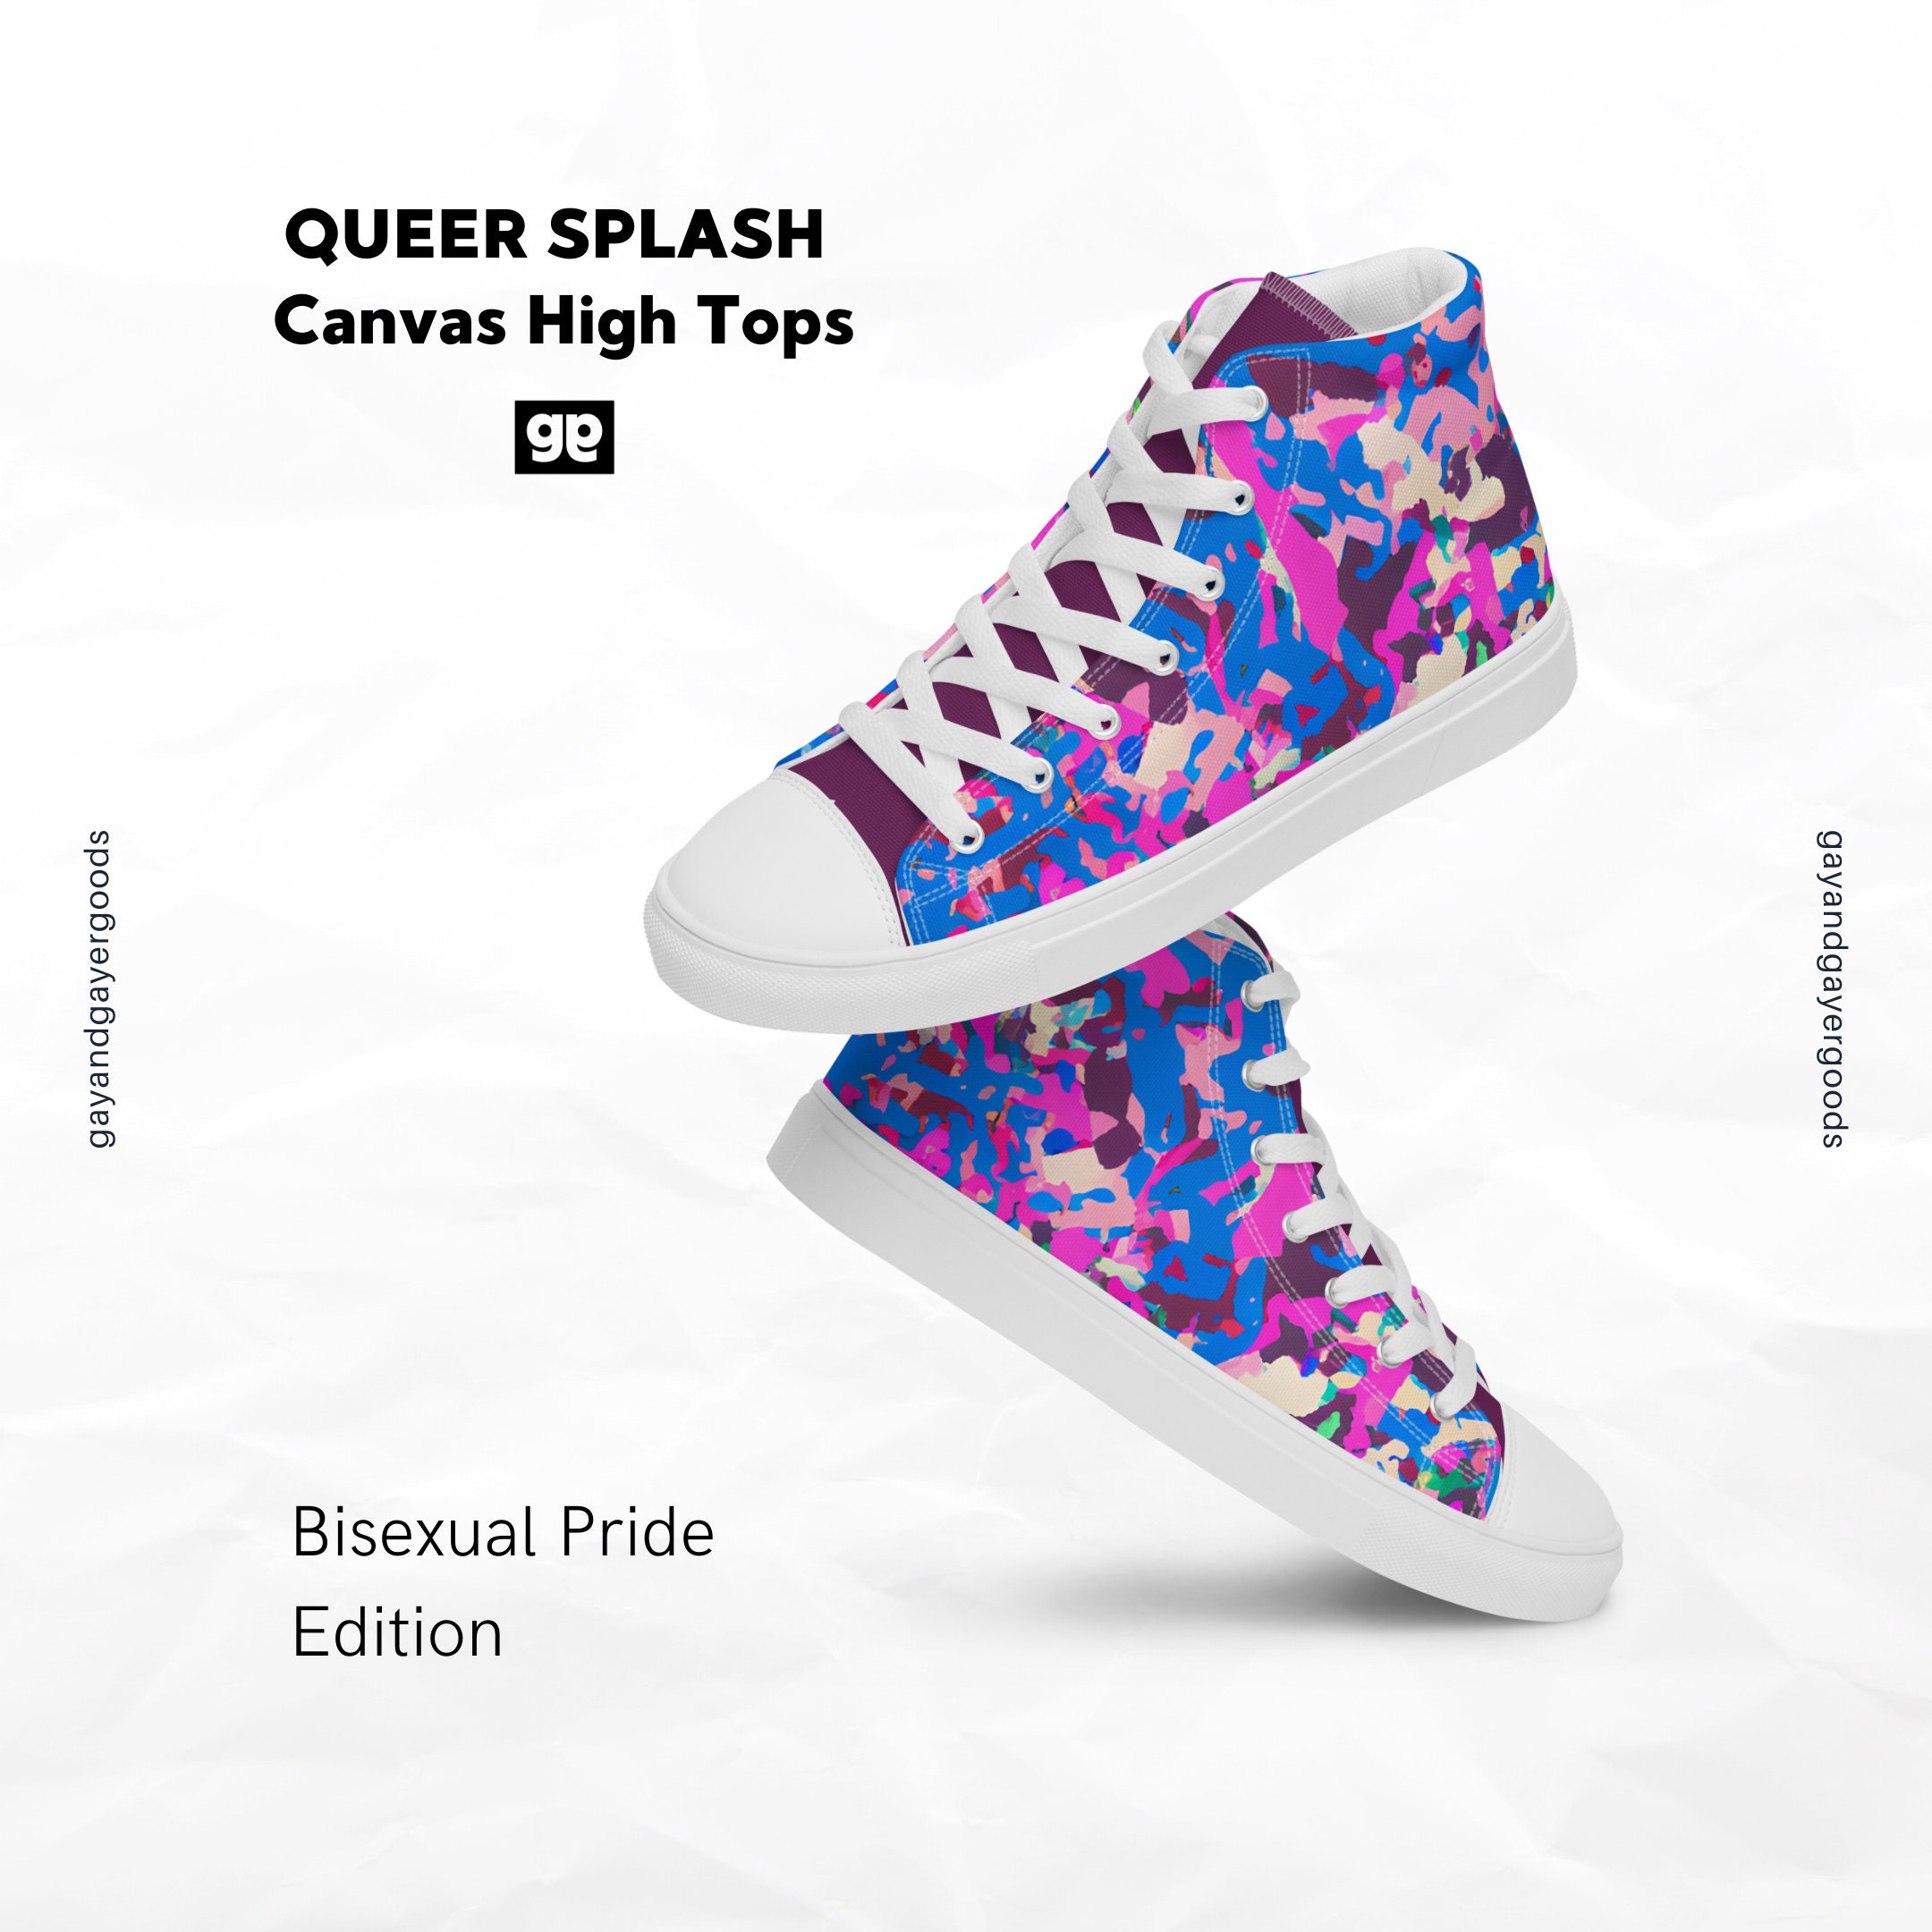 Rainbow Pride Shoelaces Subtle LGBT Pride Accessory Gradient Pride Flag  Lace Lock Sneaker Charm Gay Lesbian Bisexual Queer Gift Present 